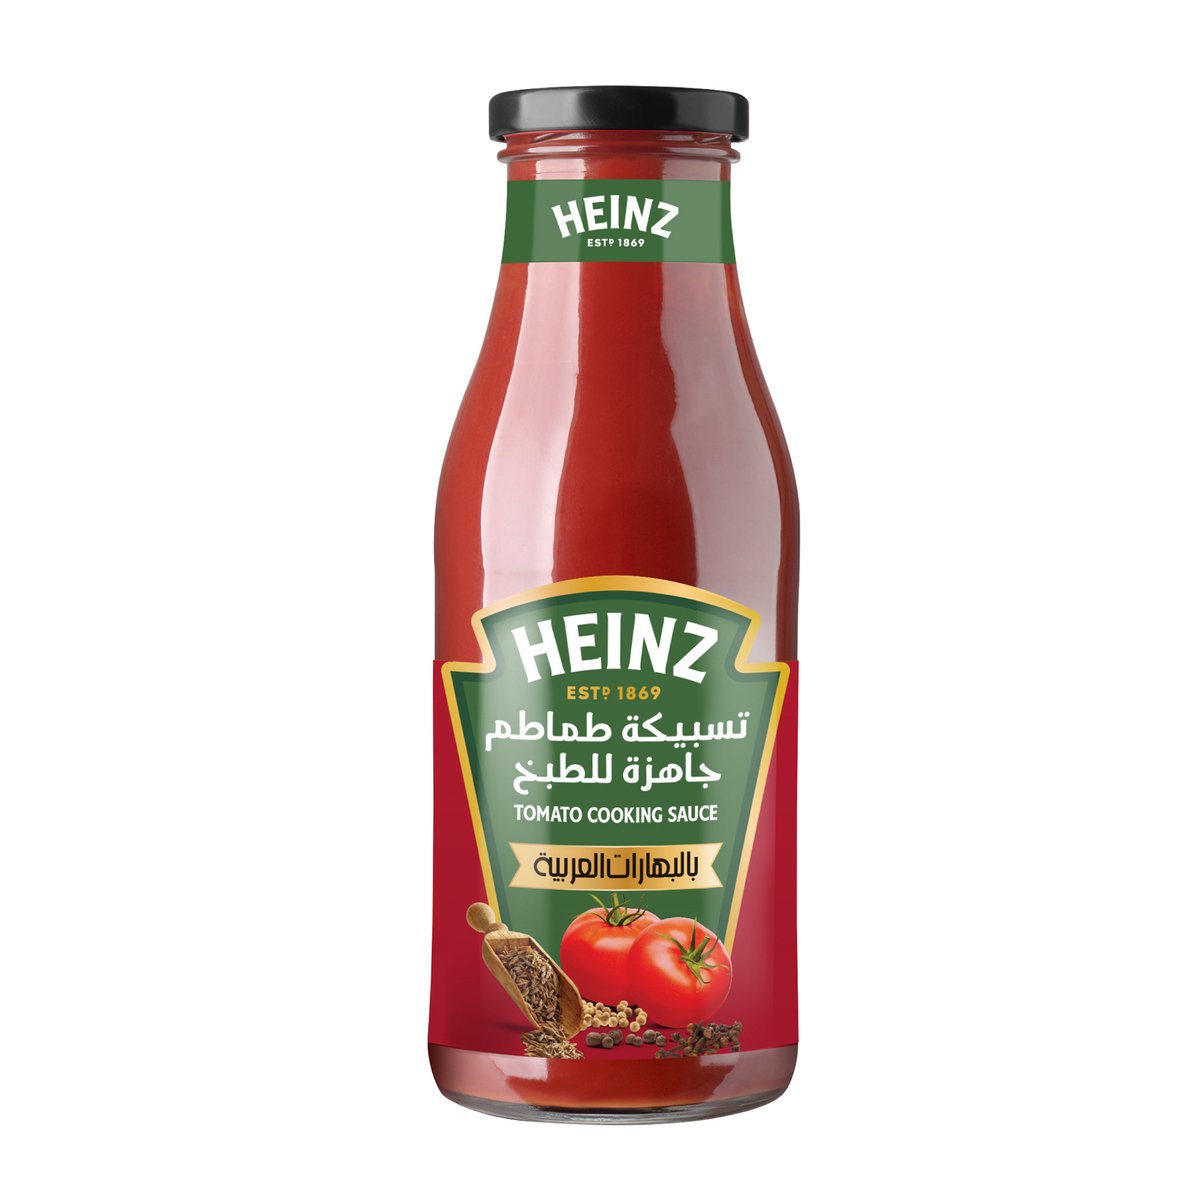 Heinz Tasbeeka Tomato Cooking Sauce with Arab Spices 290 ml